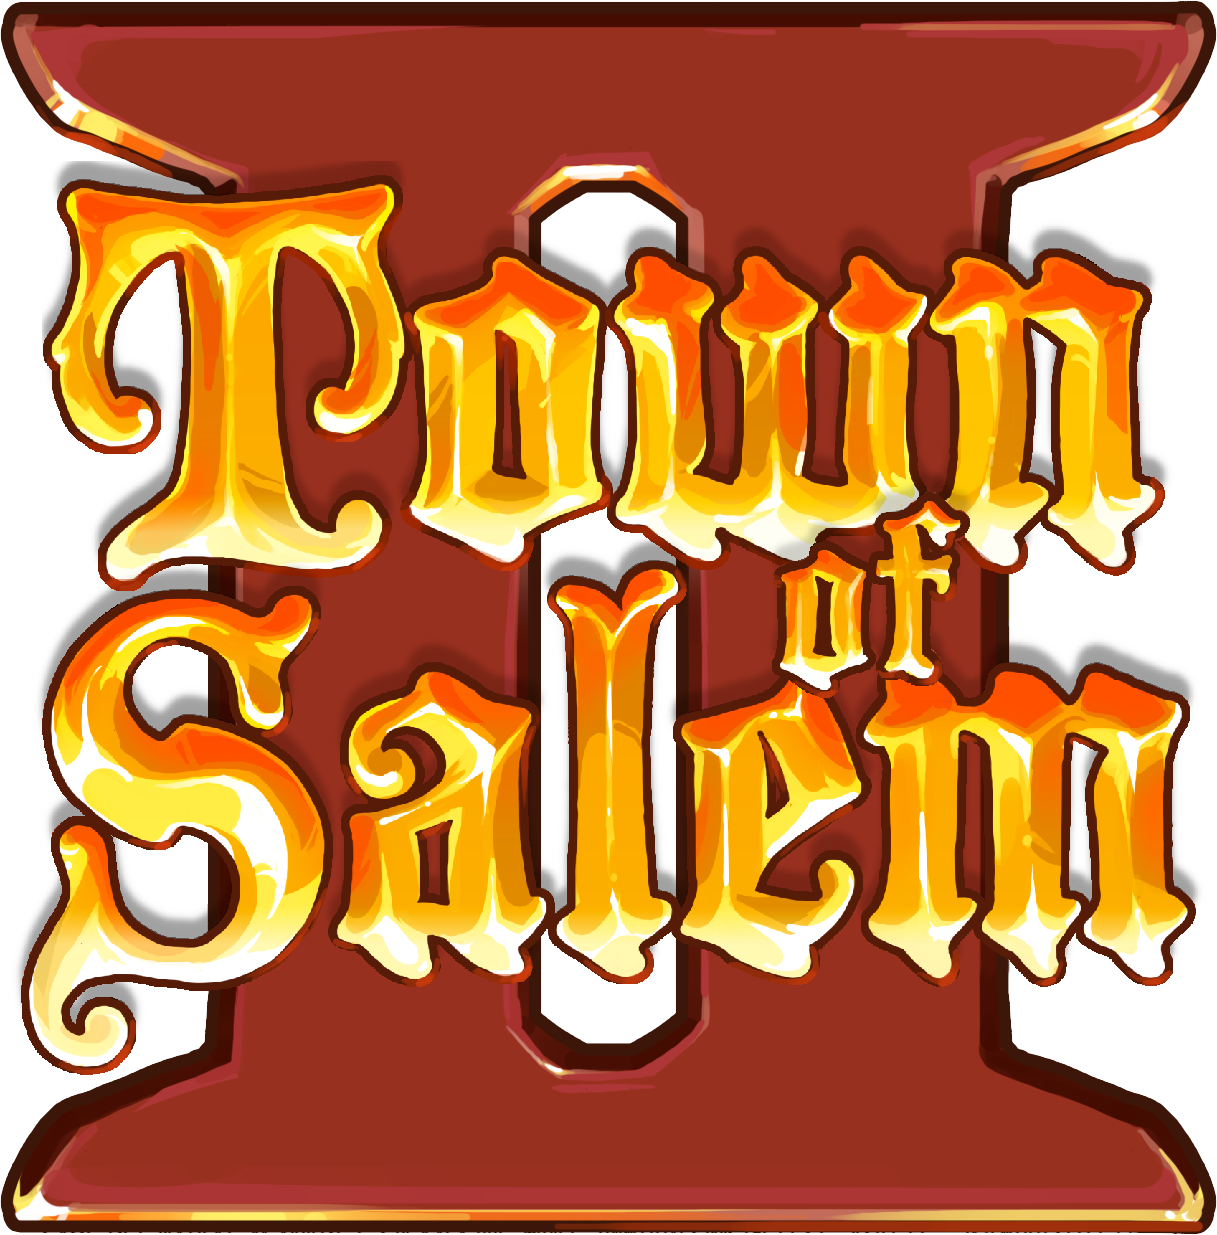 Town of Salem 2 - SteamGridDB